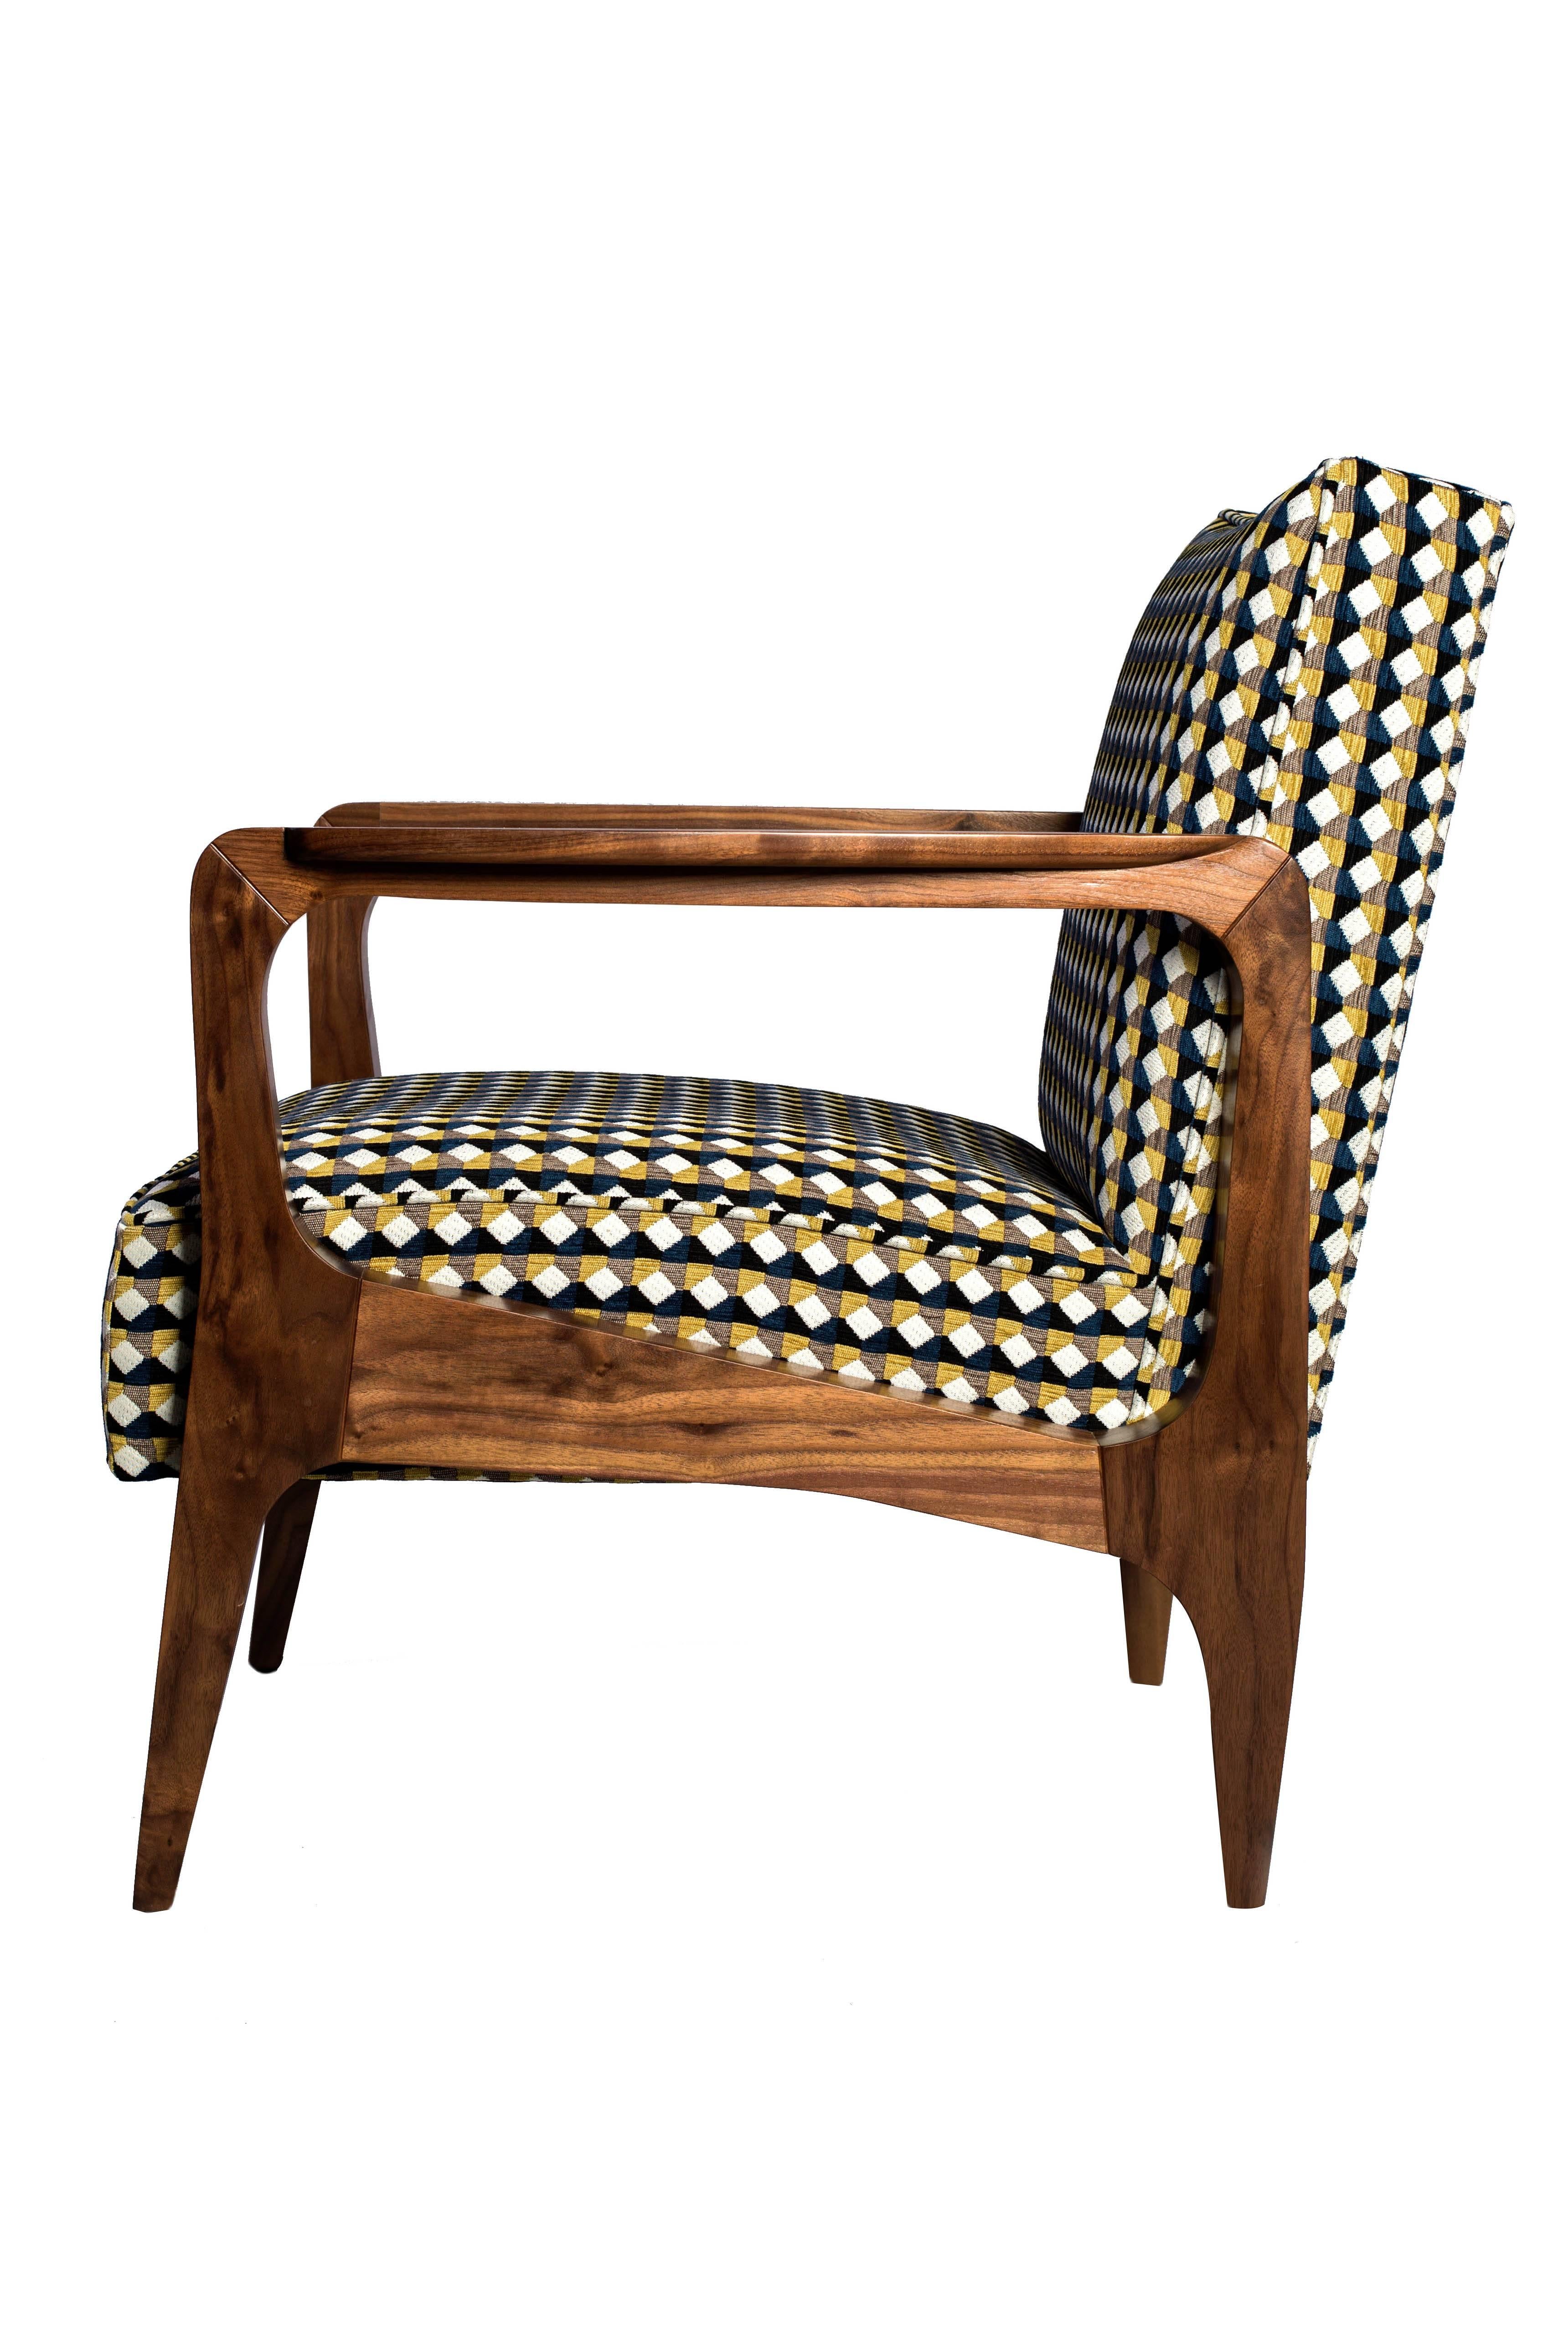 British Art Deco Inspired Atena Armchair in Black America Walnut and Rio Fabric For Sale